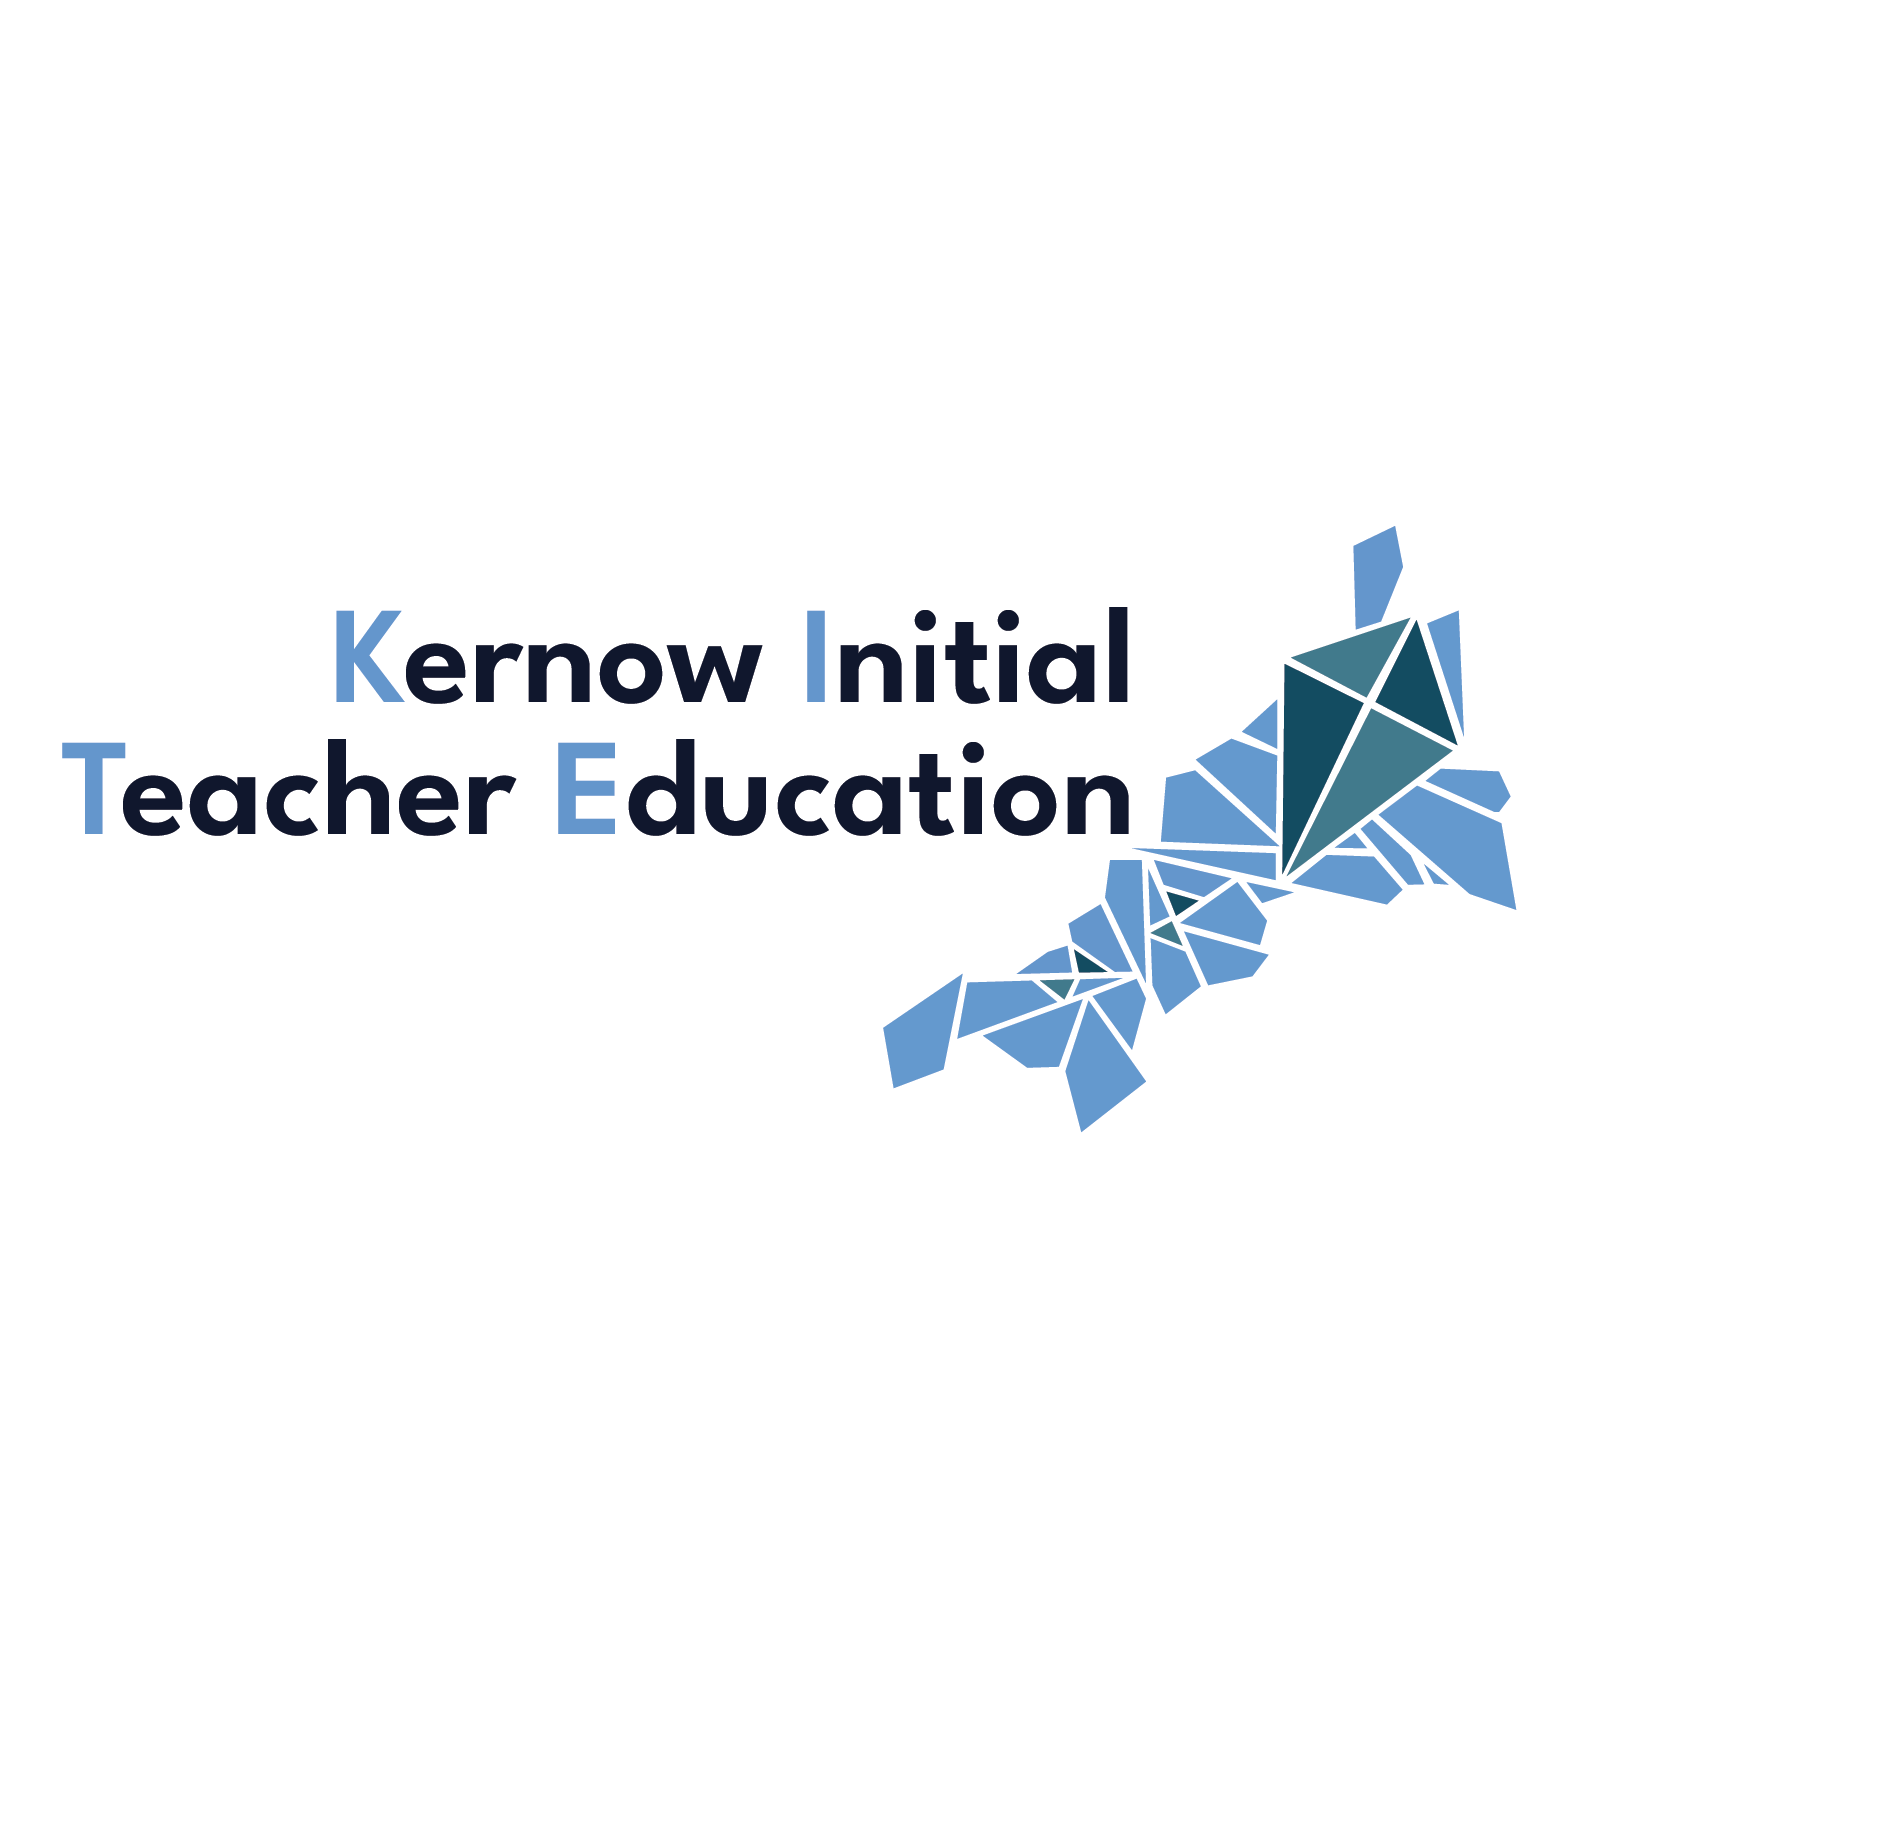 Kernow Initial Teacher Education